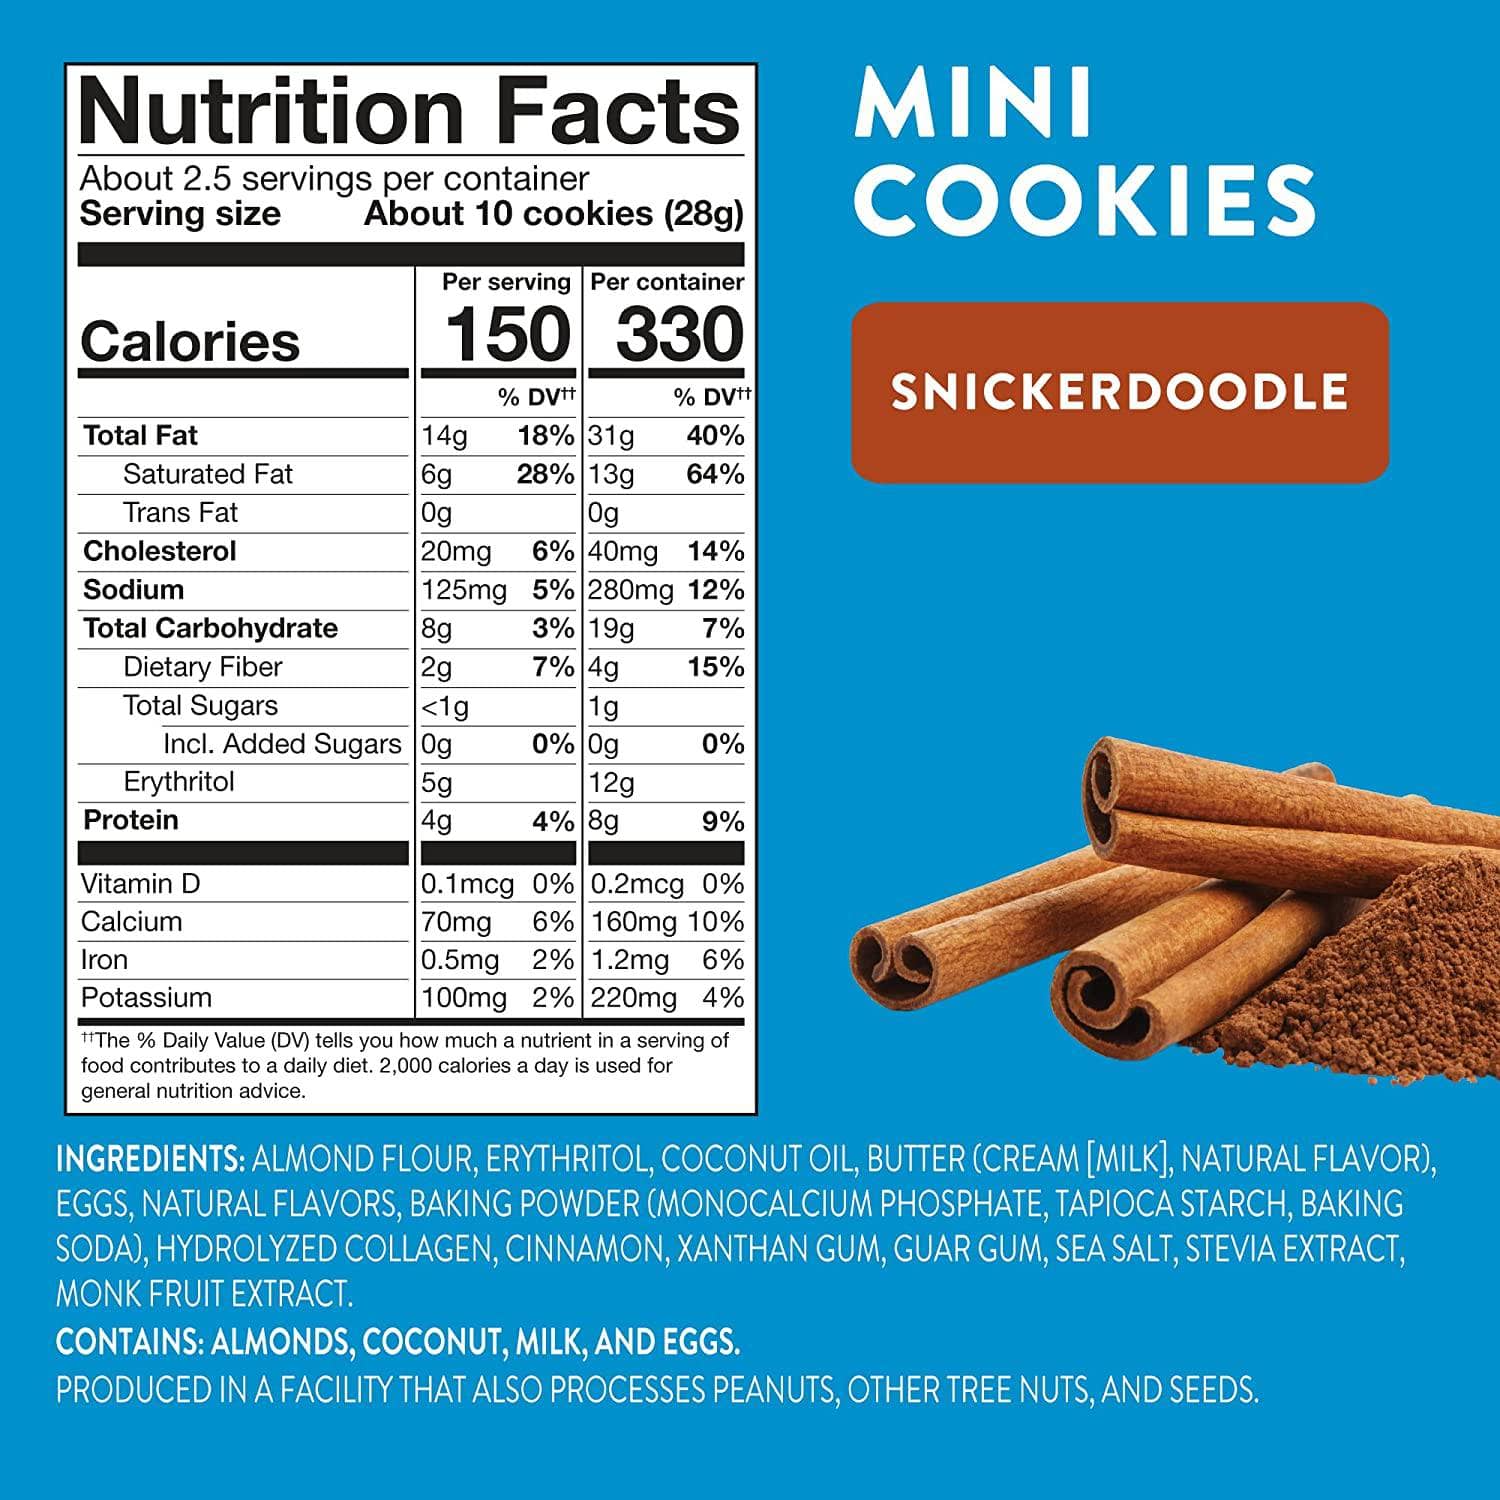 Mini Cookies: Snickerdoodle